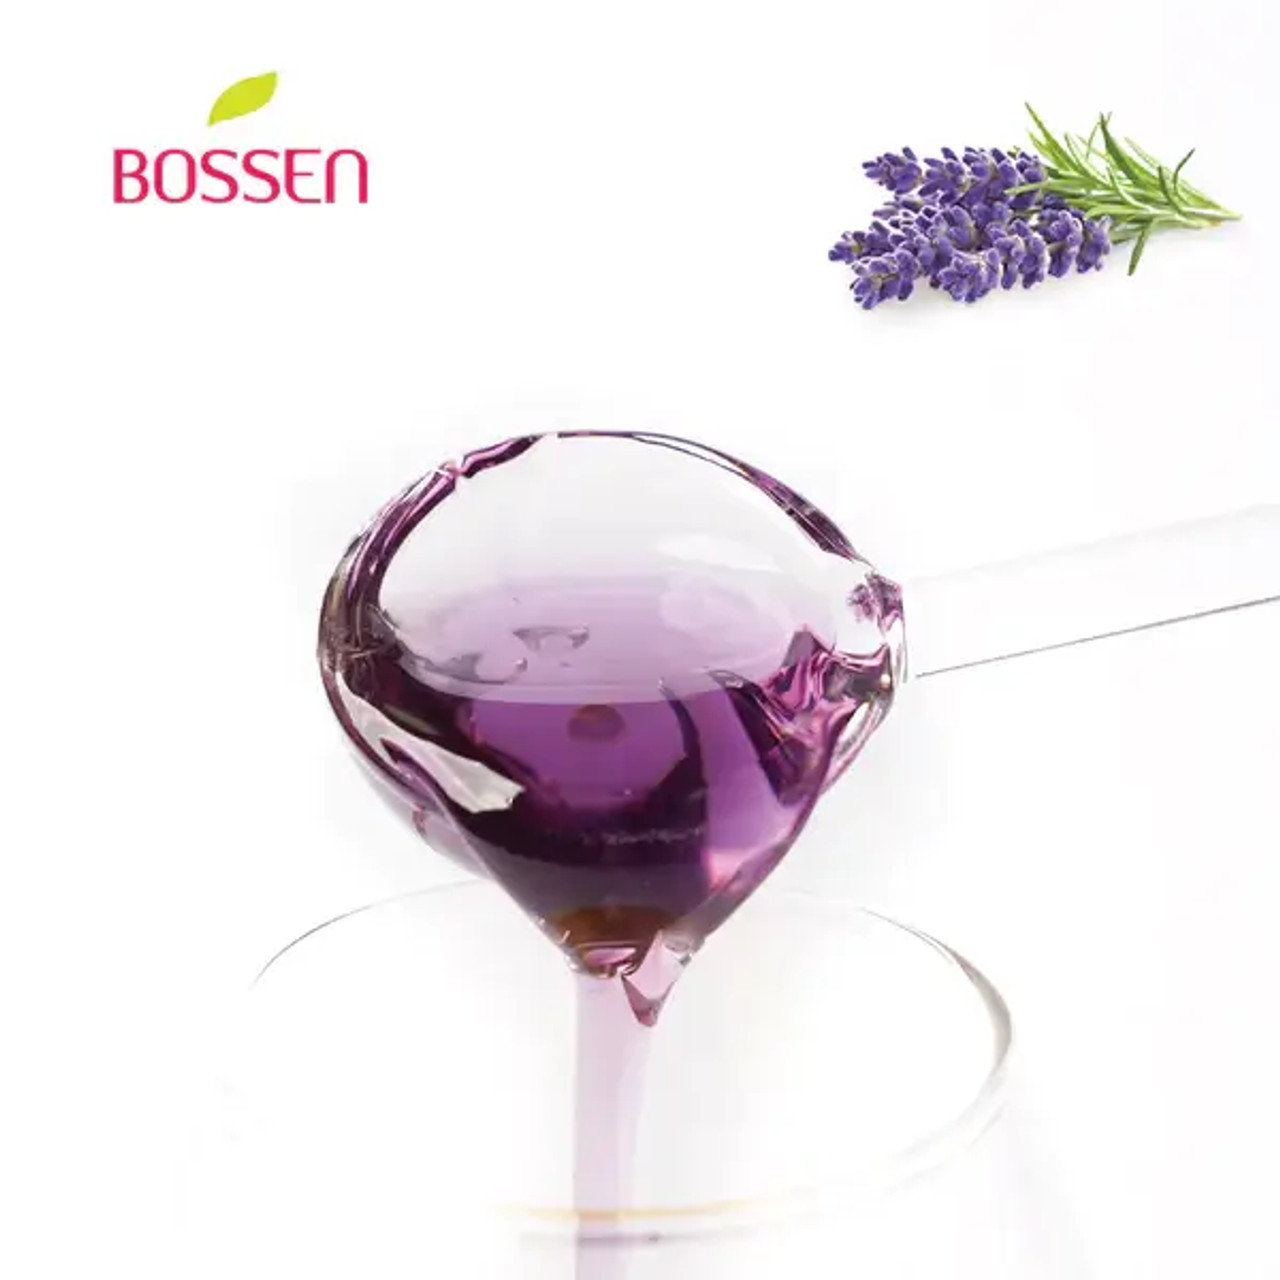 Bossen Lavender Bubble Tea Concentrated Syrup 64 fl. oz. (1.89 L) - Real Lavender Juice(6/Case)-Chicken Pieces